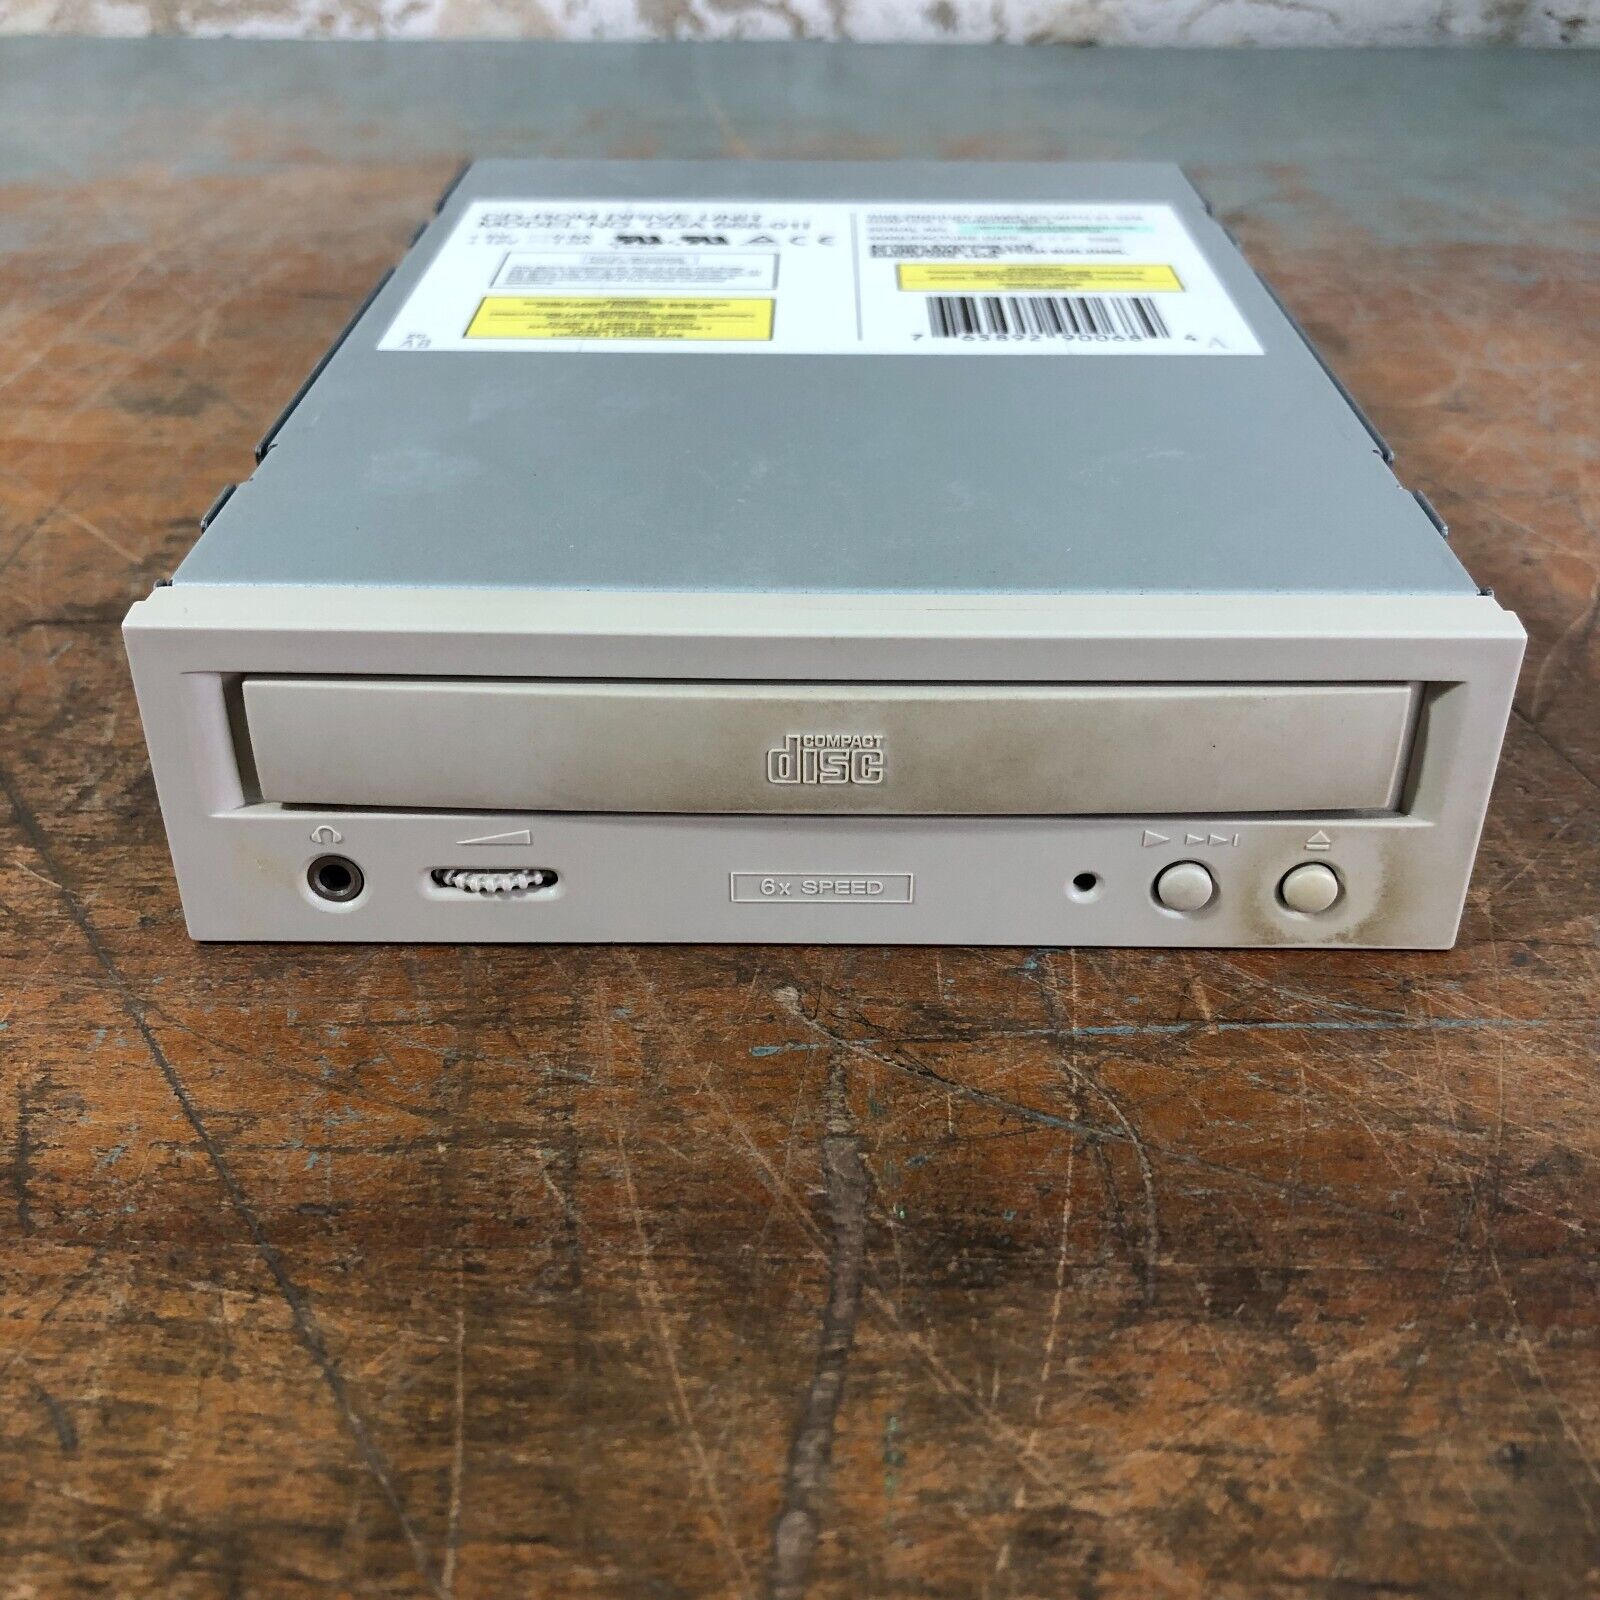 AZTECH LABS CDA 668-021I 6X IDE Internal CD-ROM Drive - WORKS